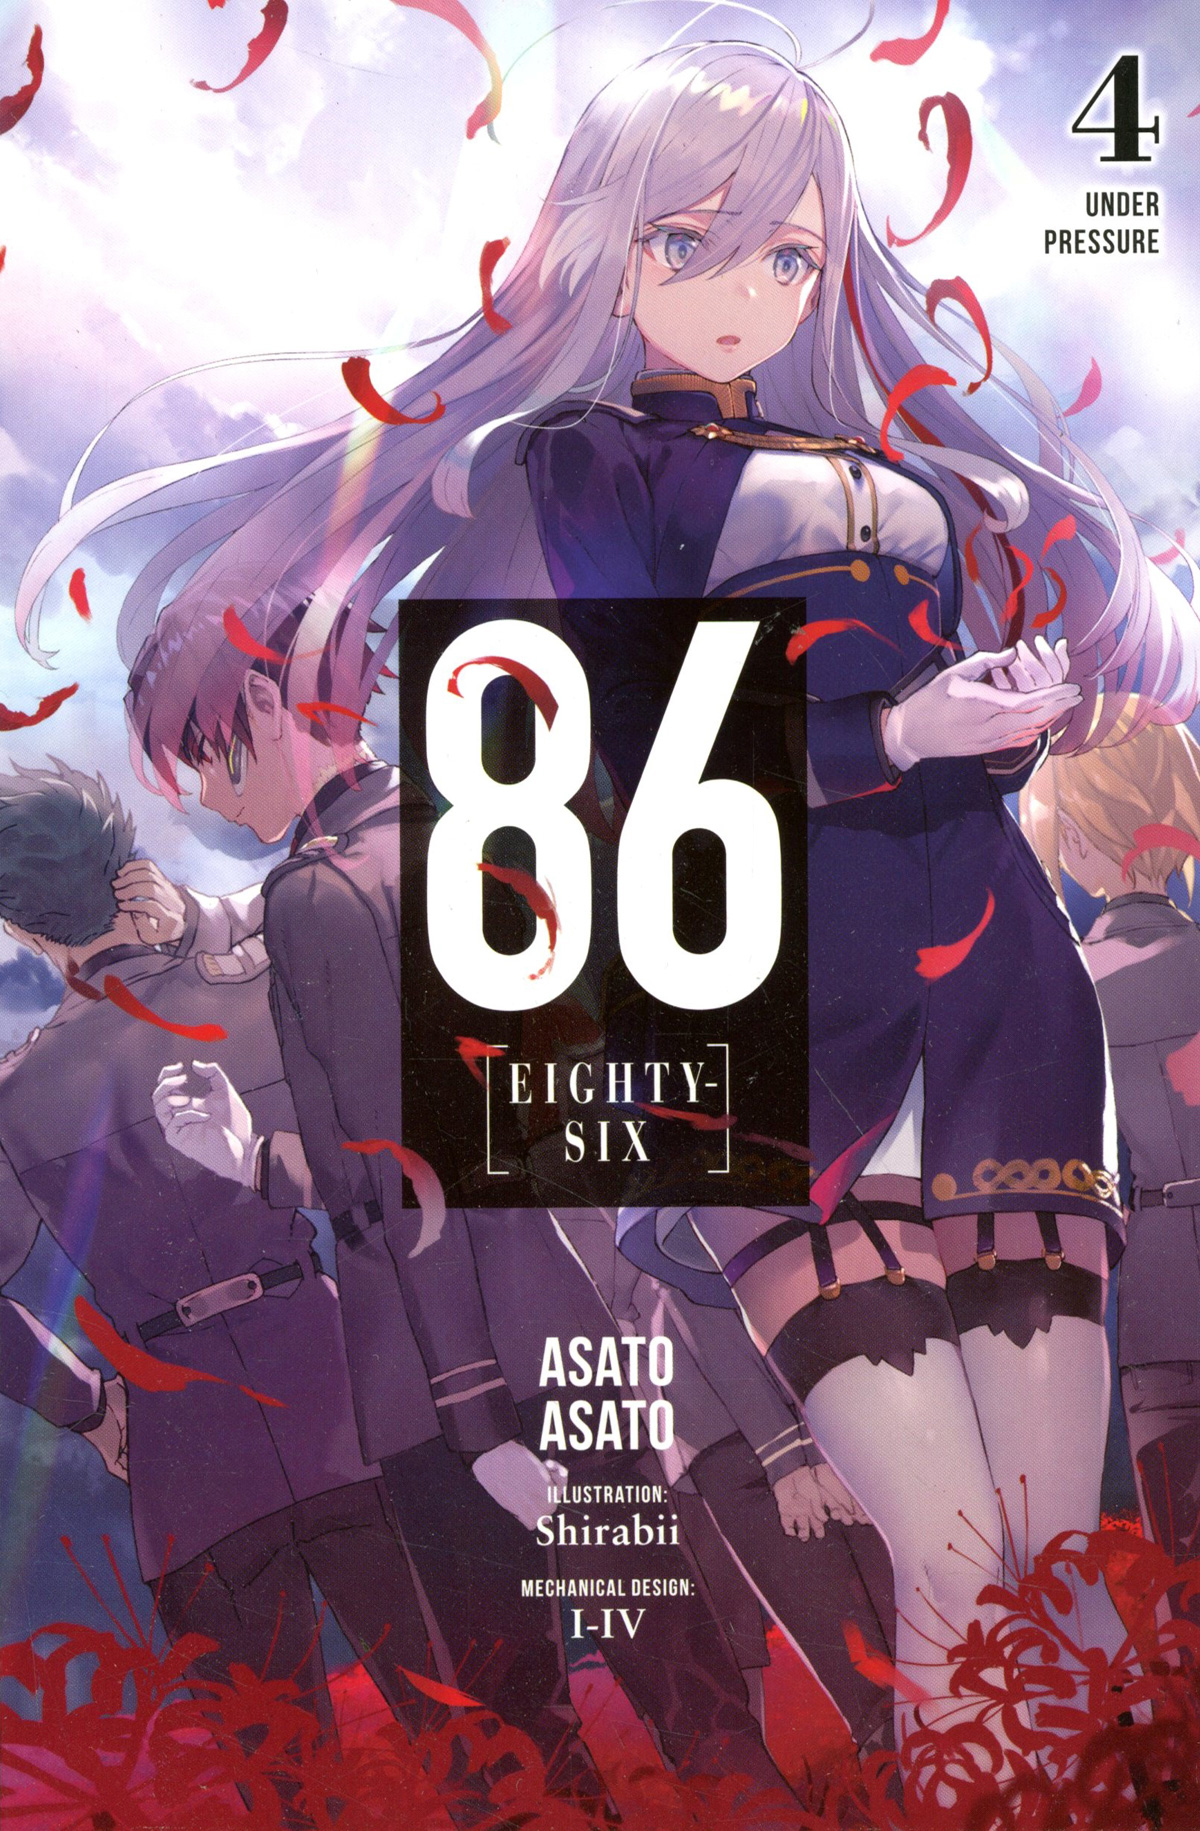 86-EIGHTY-SIX Light Novel Vol 4